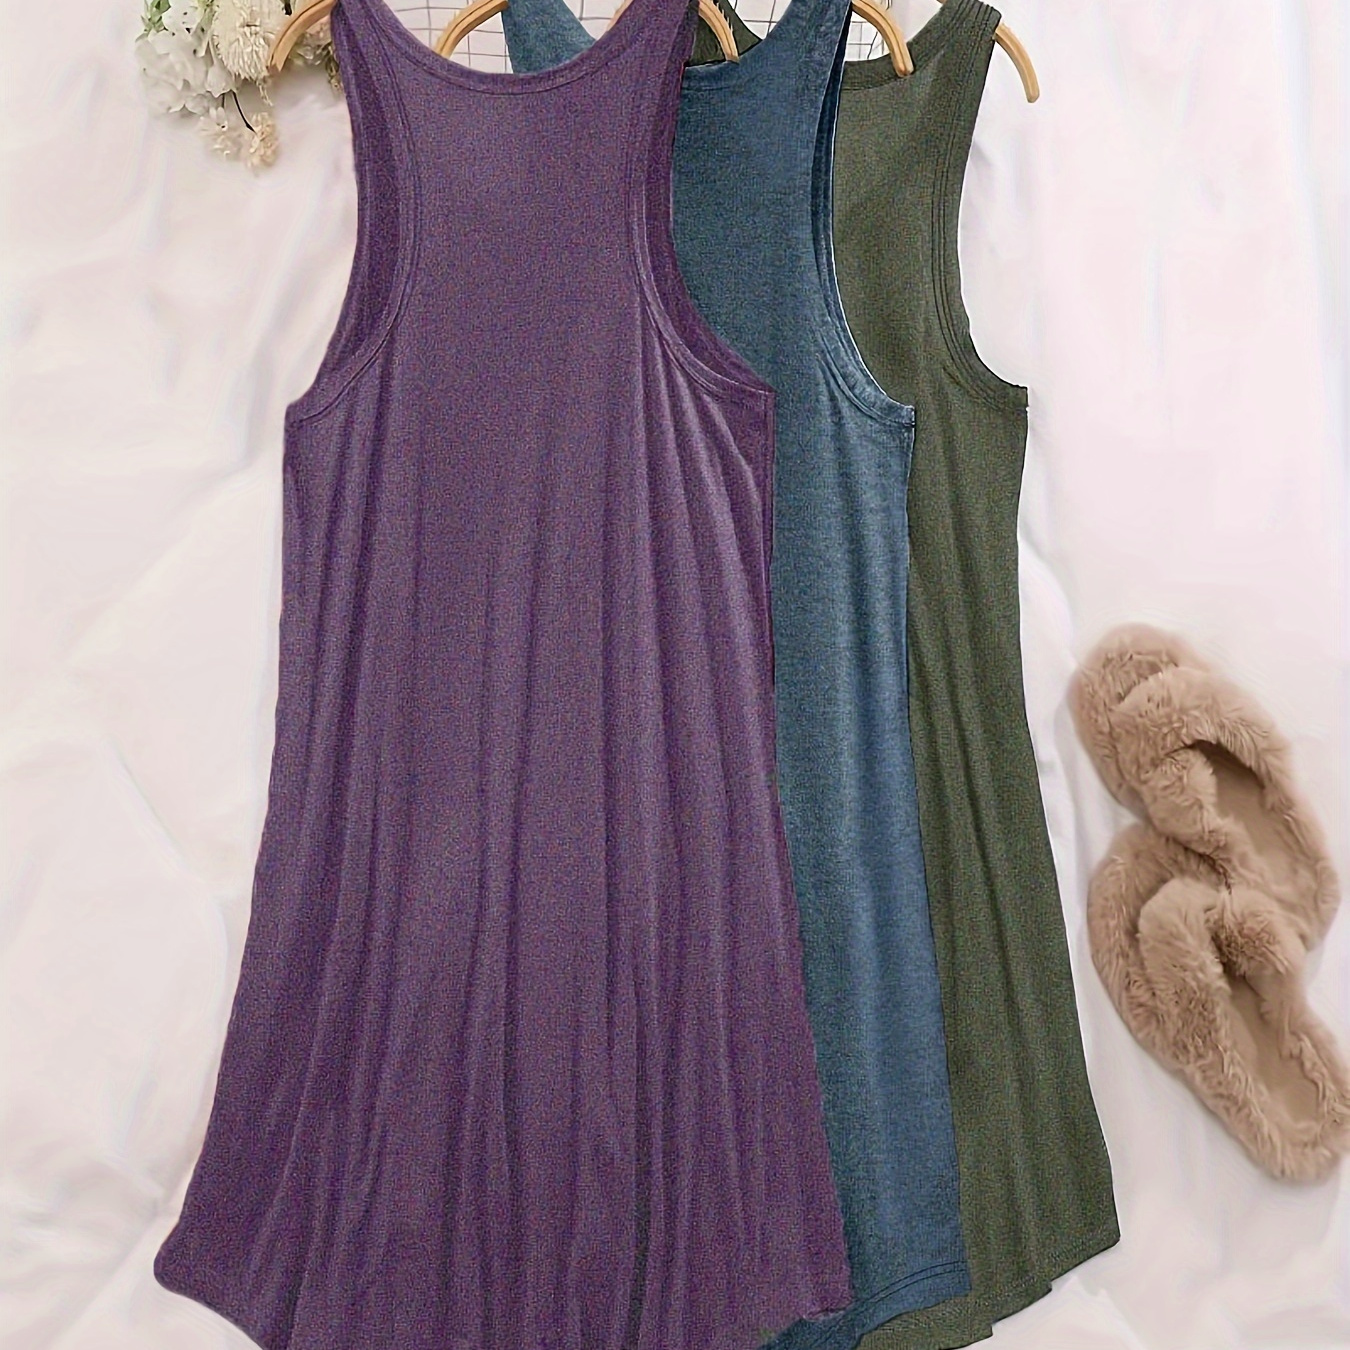 

3 Pcs Women's Solid Casual Sleepwear Dress, Round Neck Loose Fit Midi Tank Dress, Comfortable Nightgown